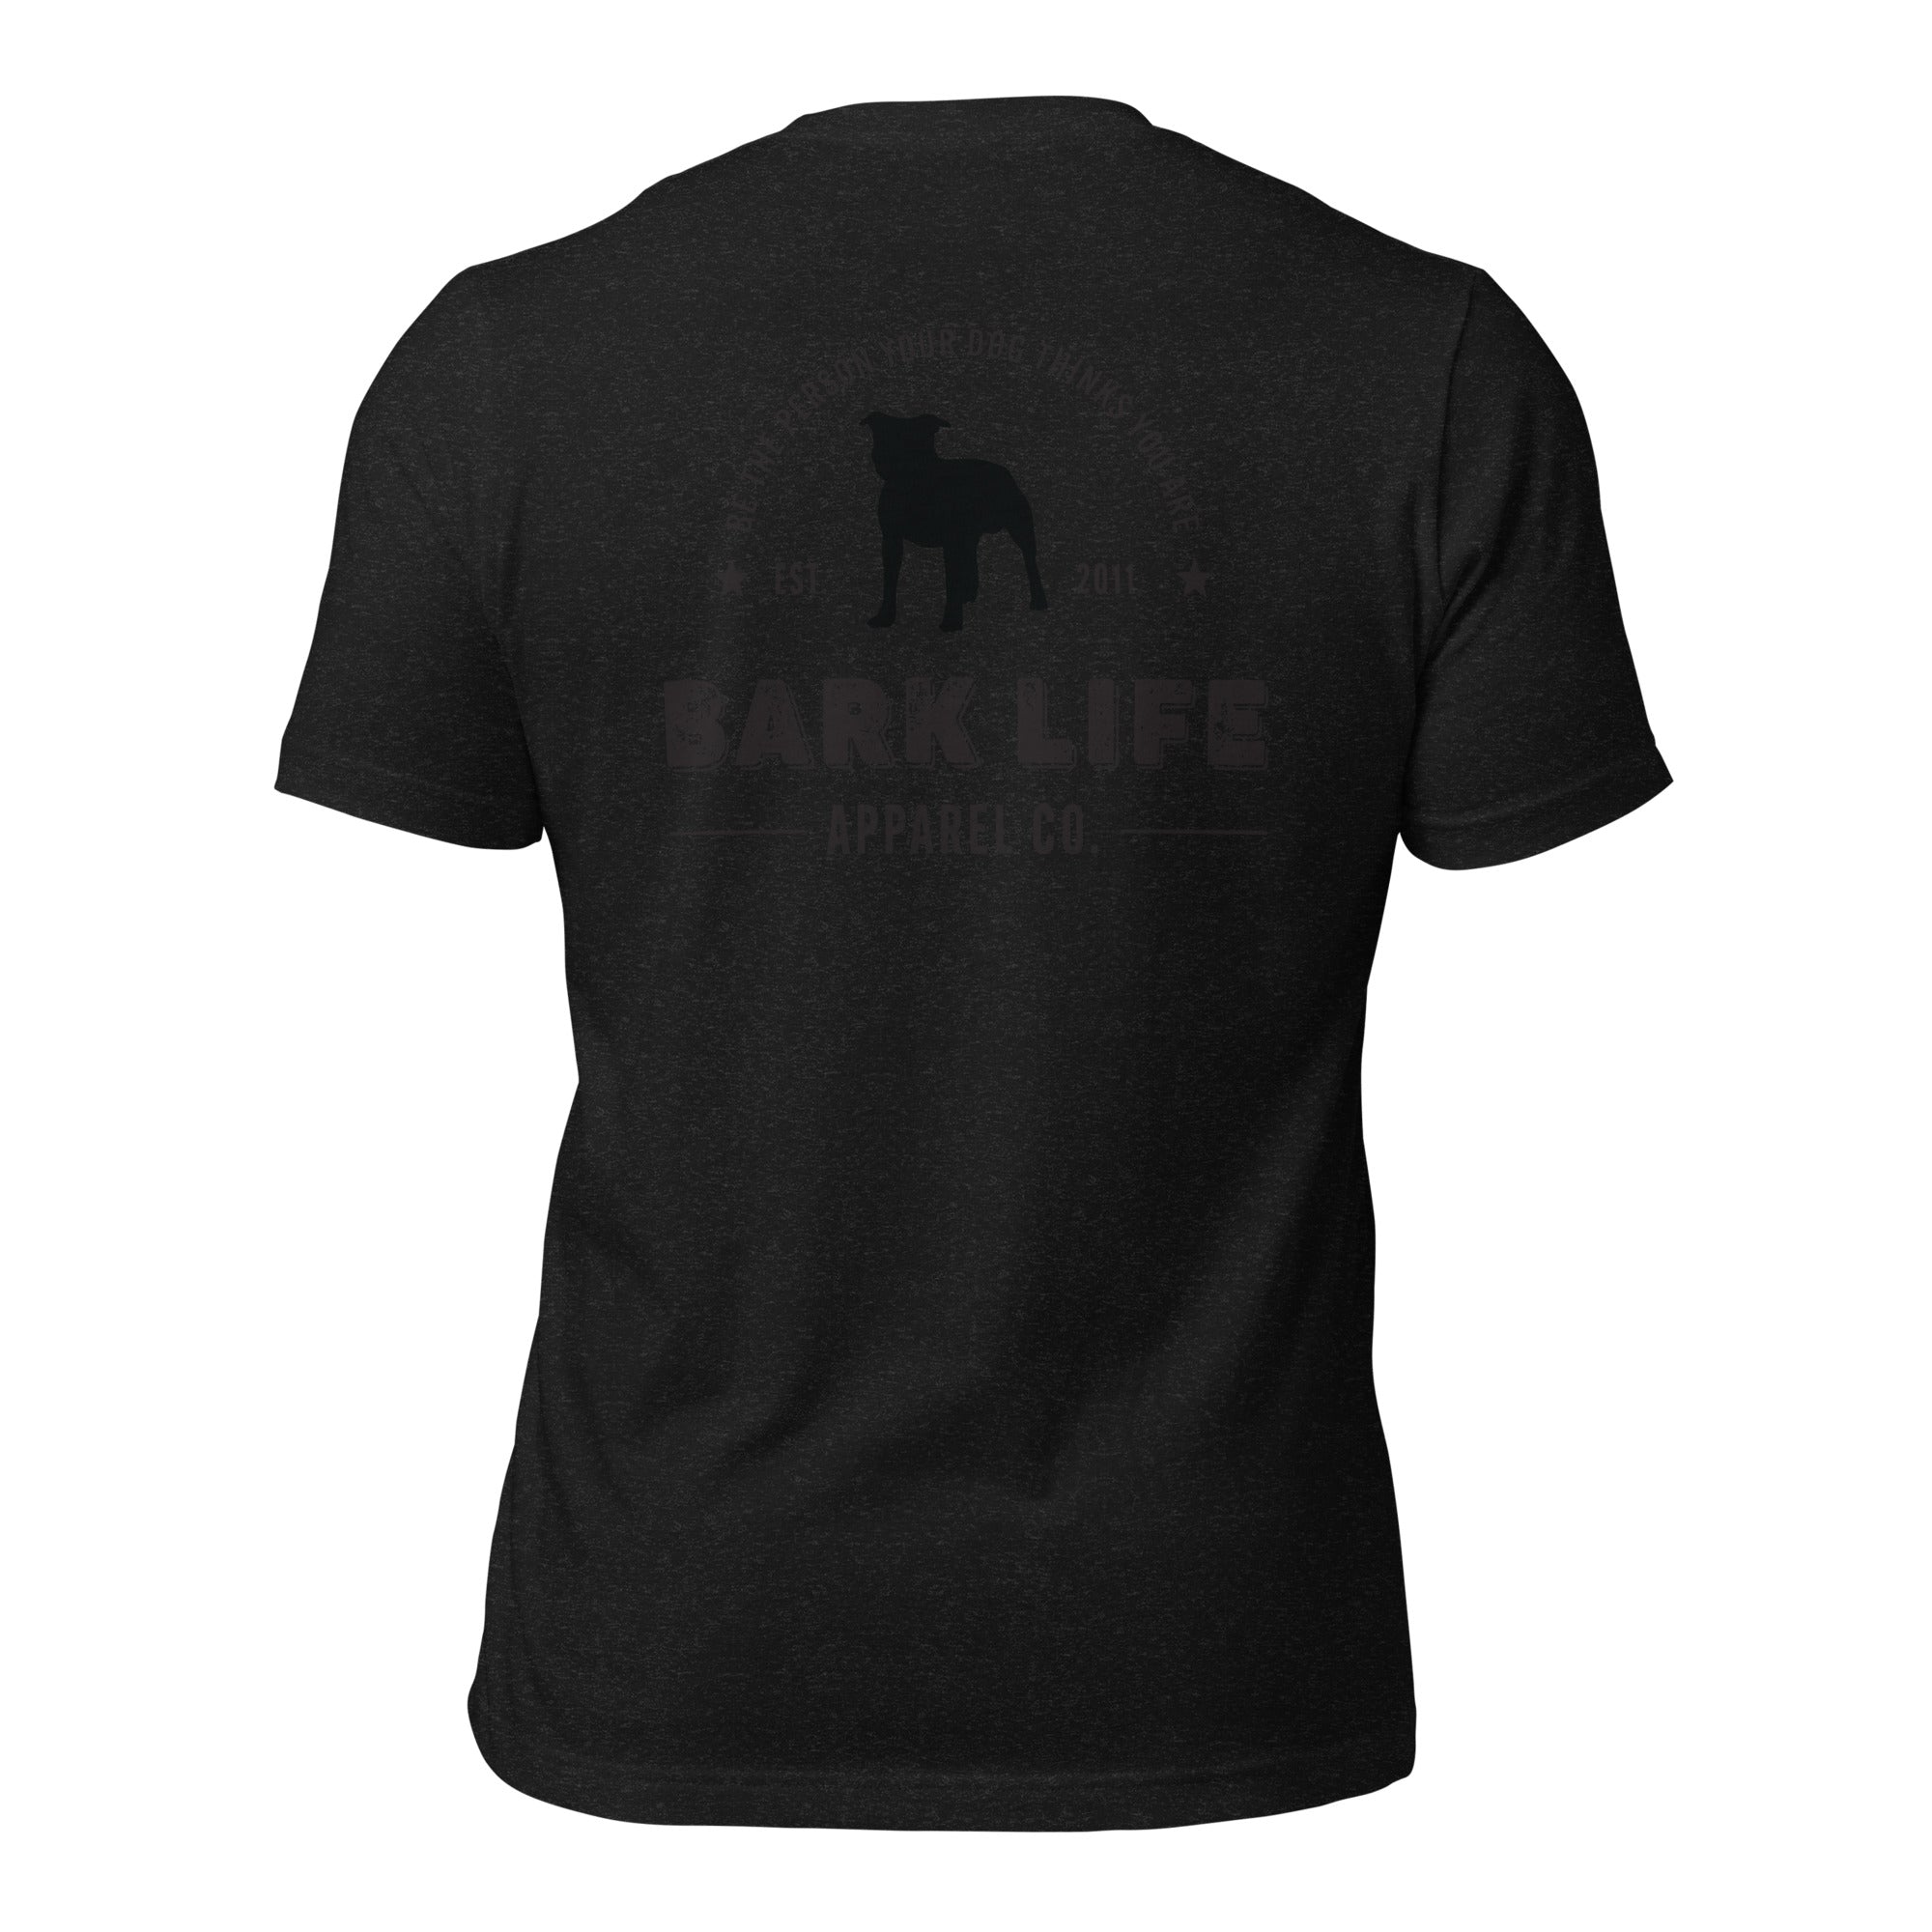 American Staffordshire Terrier - Short Sleeve Cotton Tee  Shirt